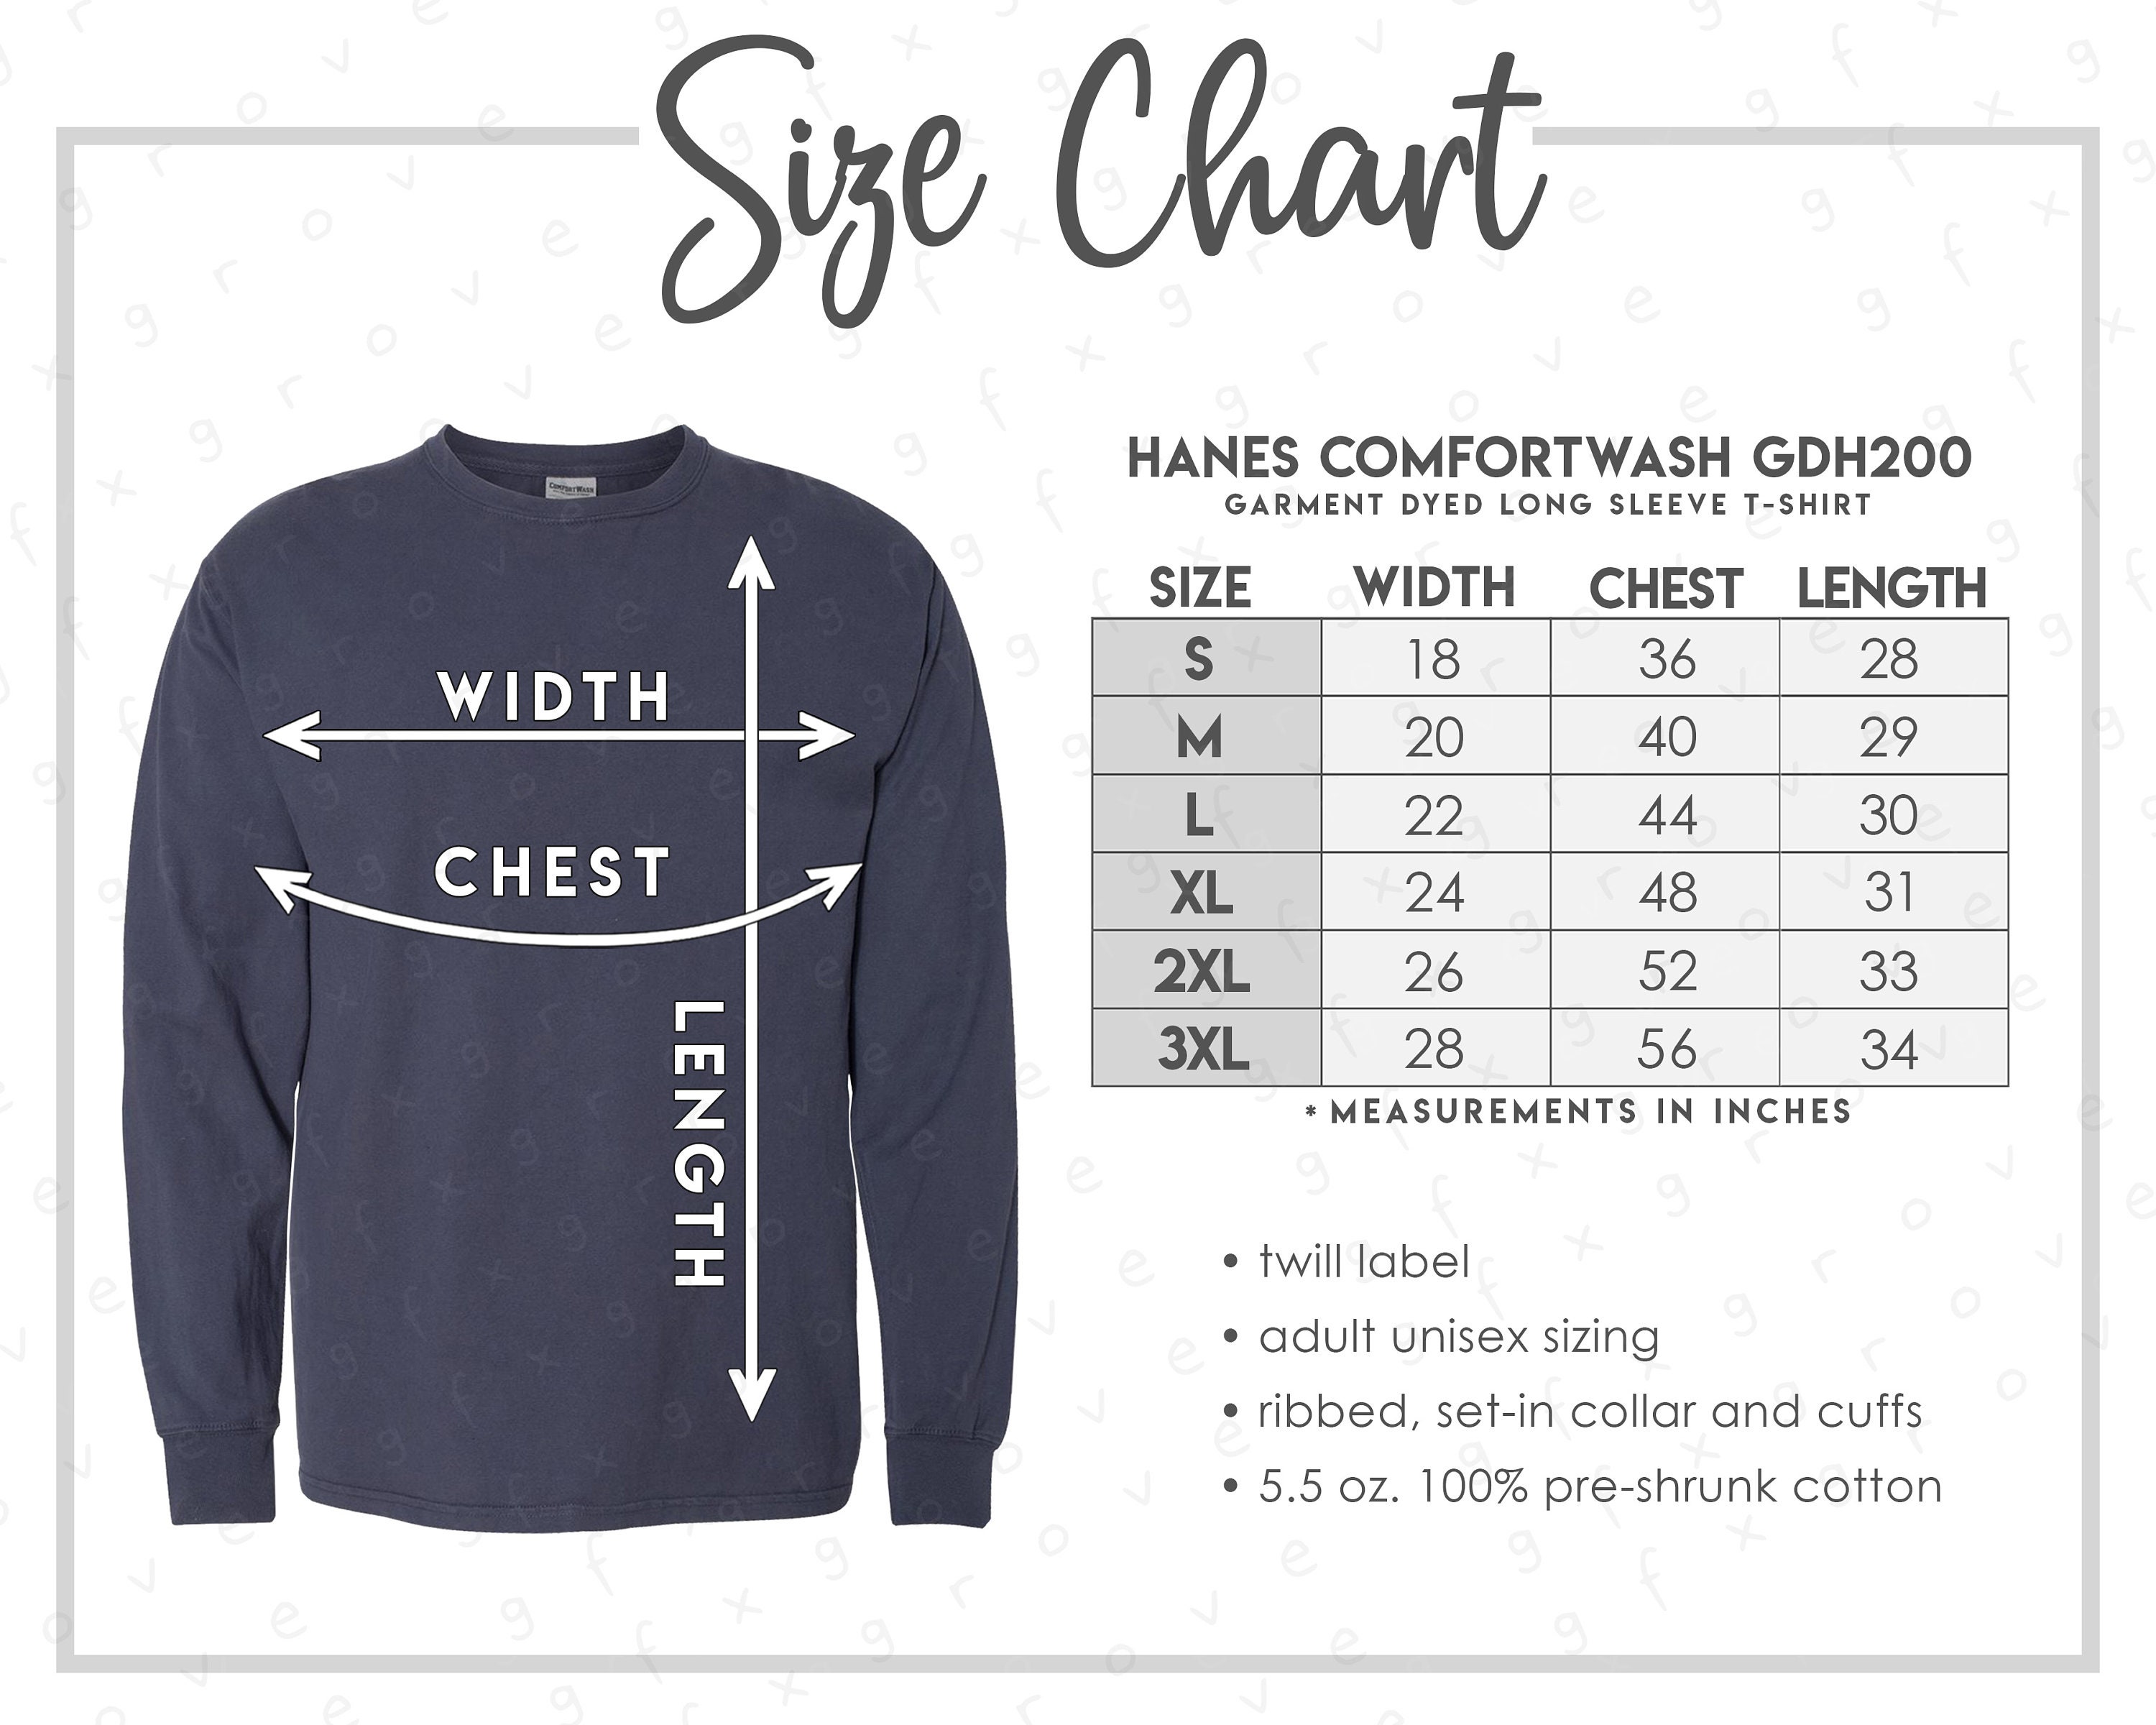 boks Post fure Hanes Comfortwash GDH200 Size Chart Comfortwash Long Sleeve - Etsy